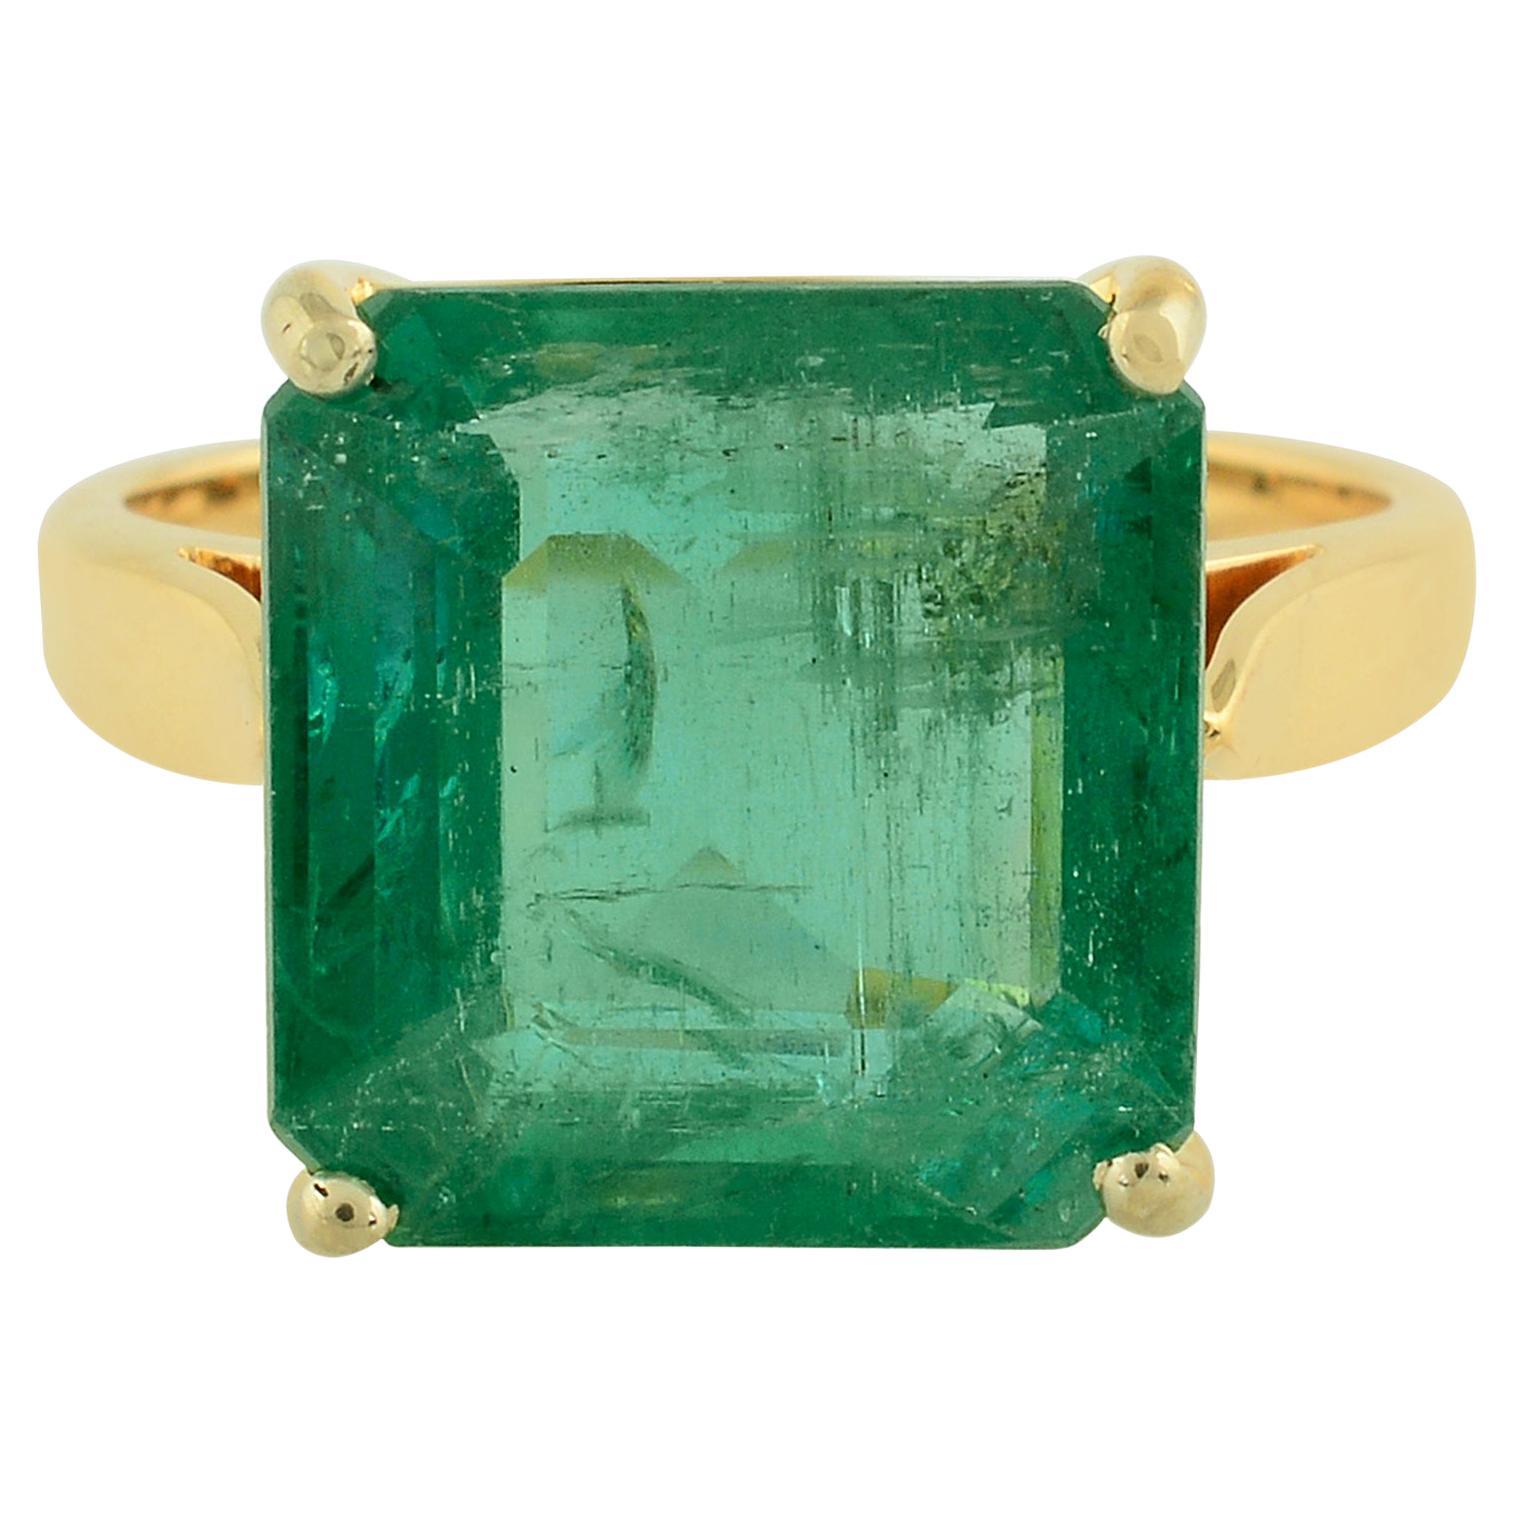 5.84 Carat Solitaire Zambian Emerald Gemstone Ring 18k Yellow Gold Fine Jewelry